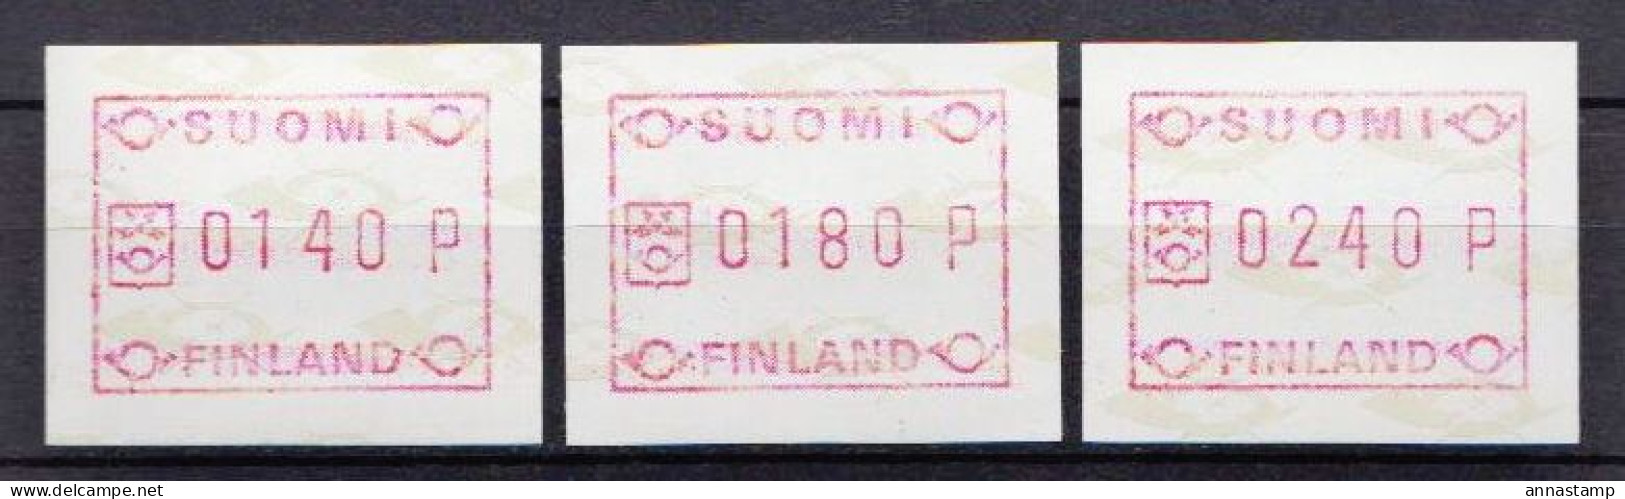 Finland MNH Stamps - Automatenmarken [ATM]